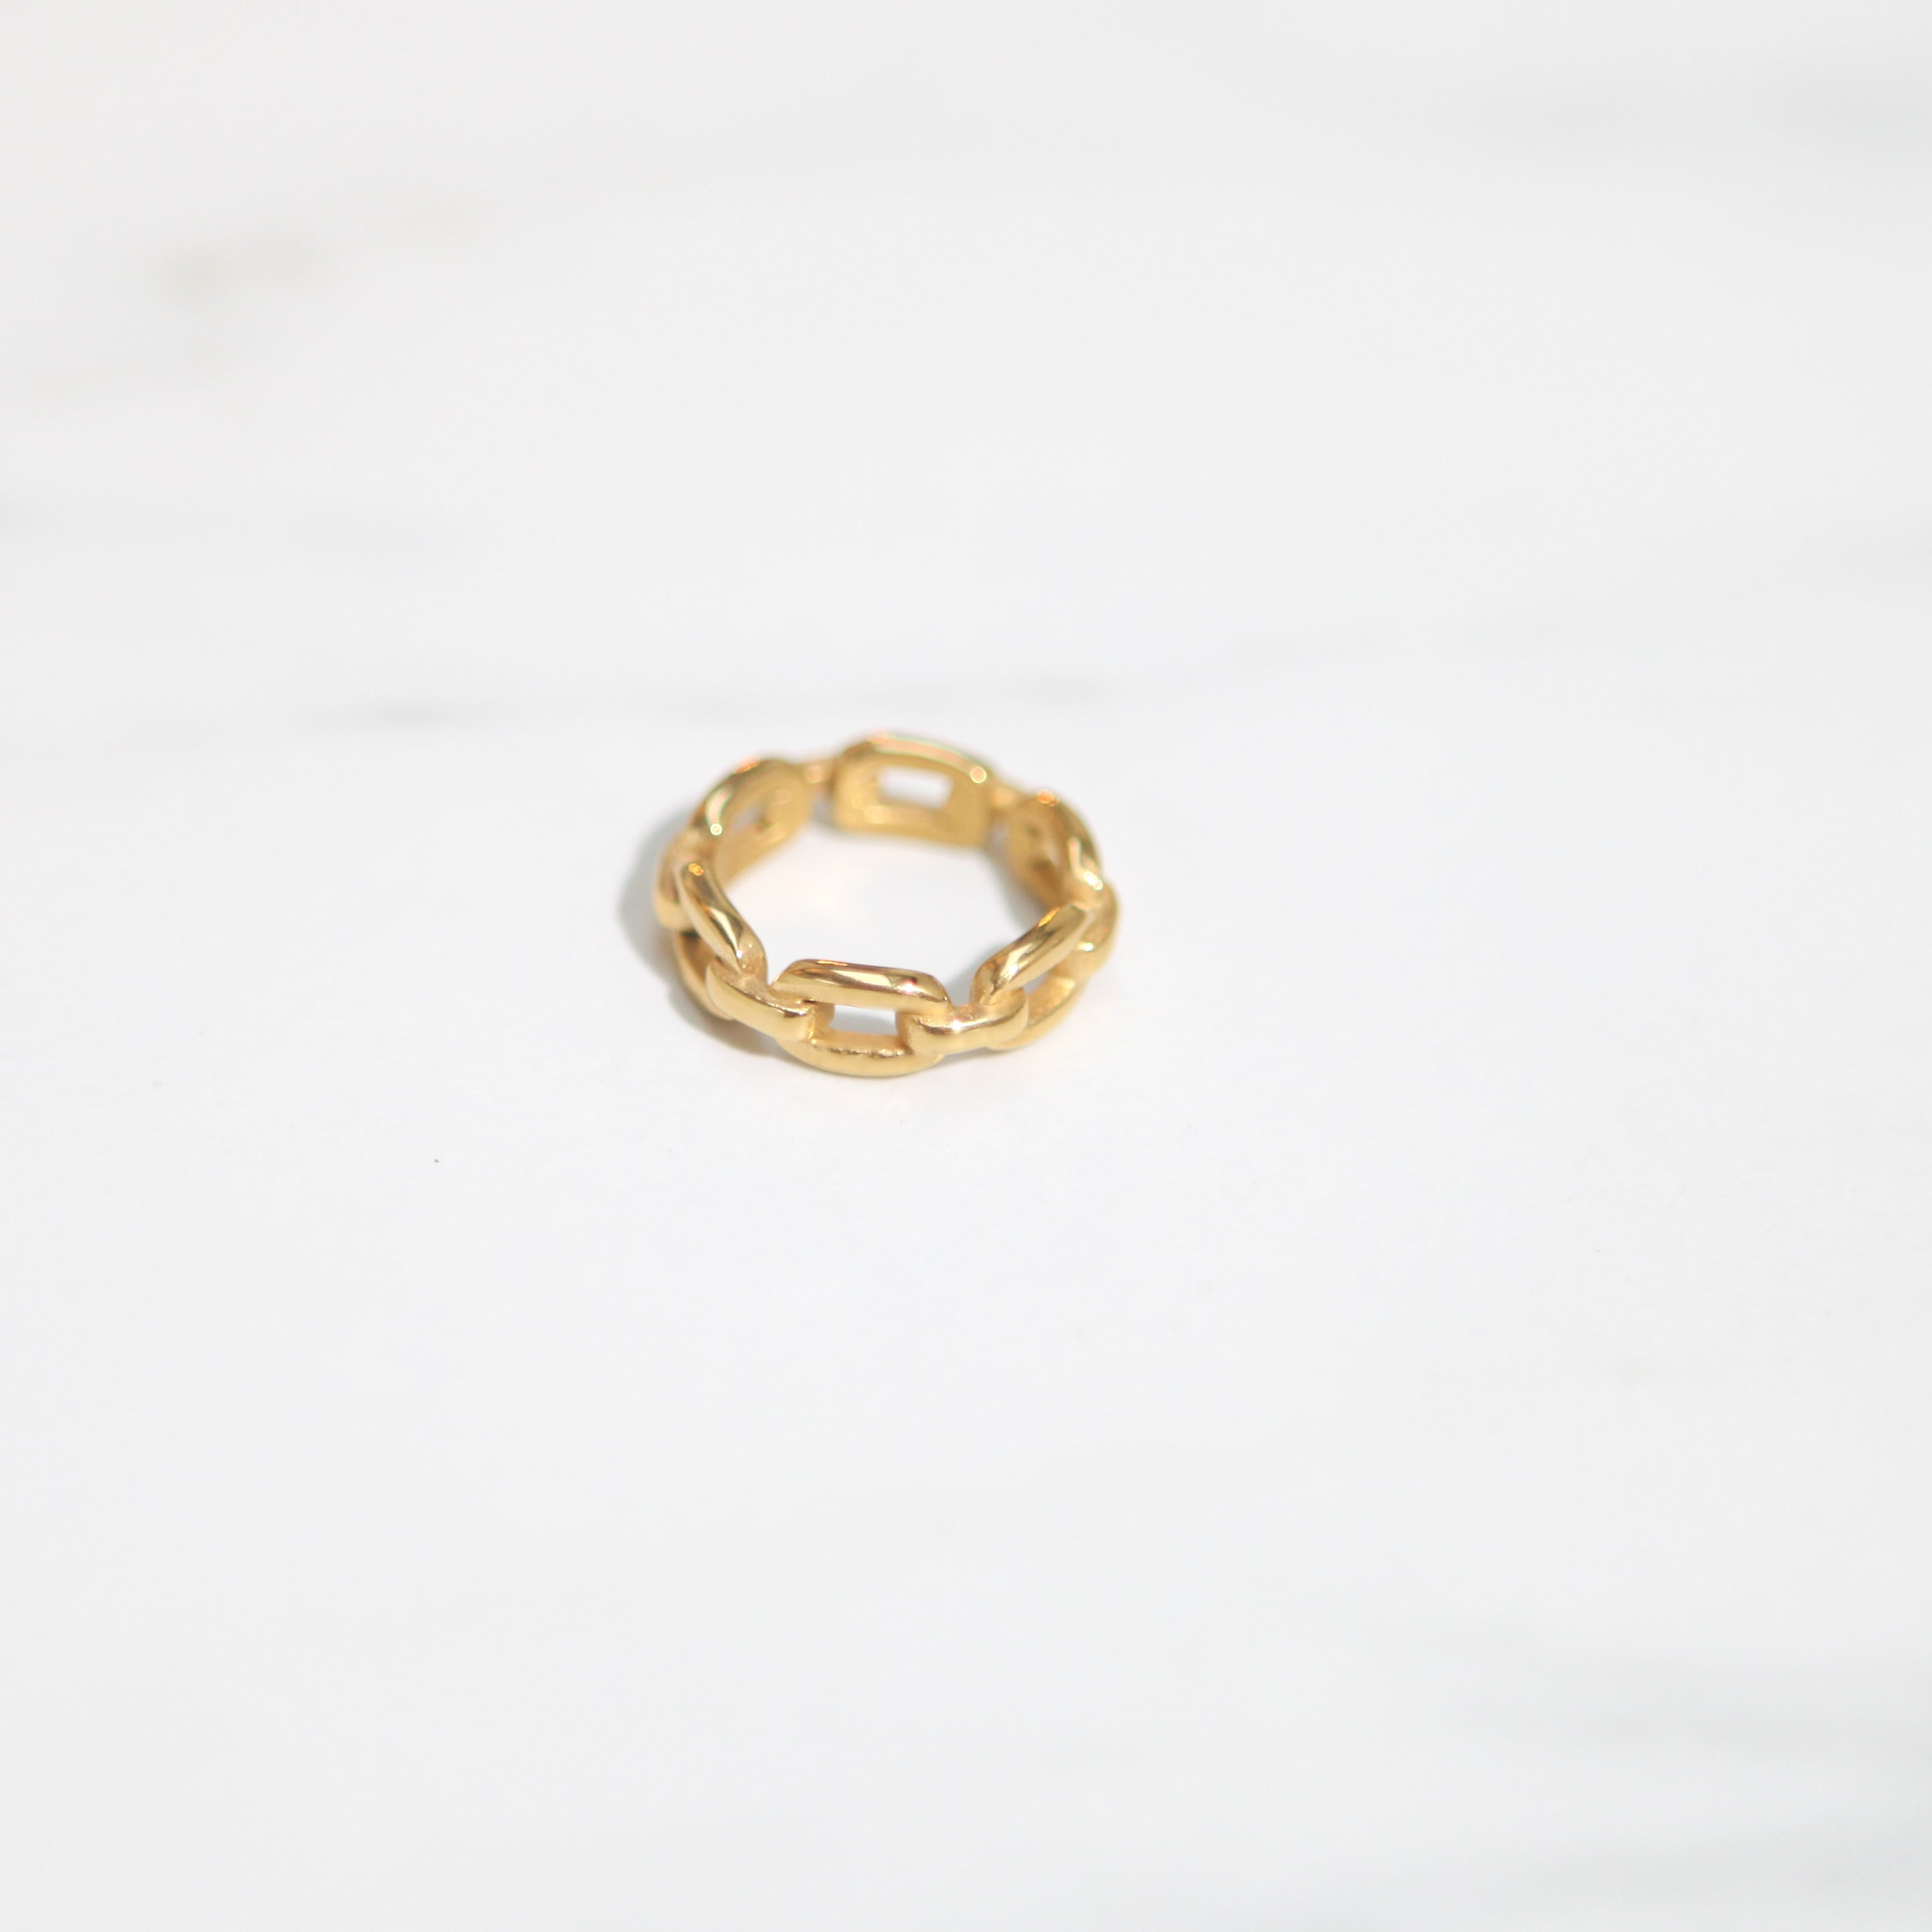 Harvey - 18k Gold Ring